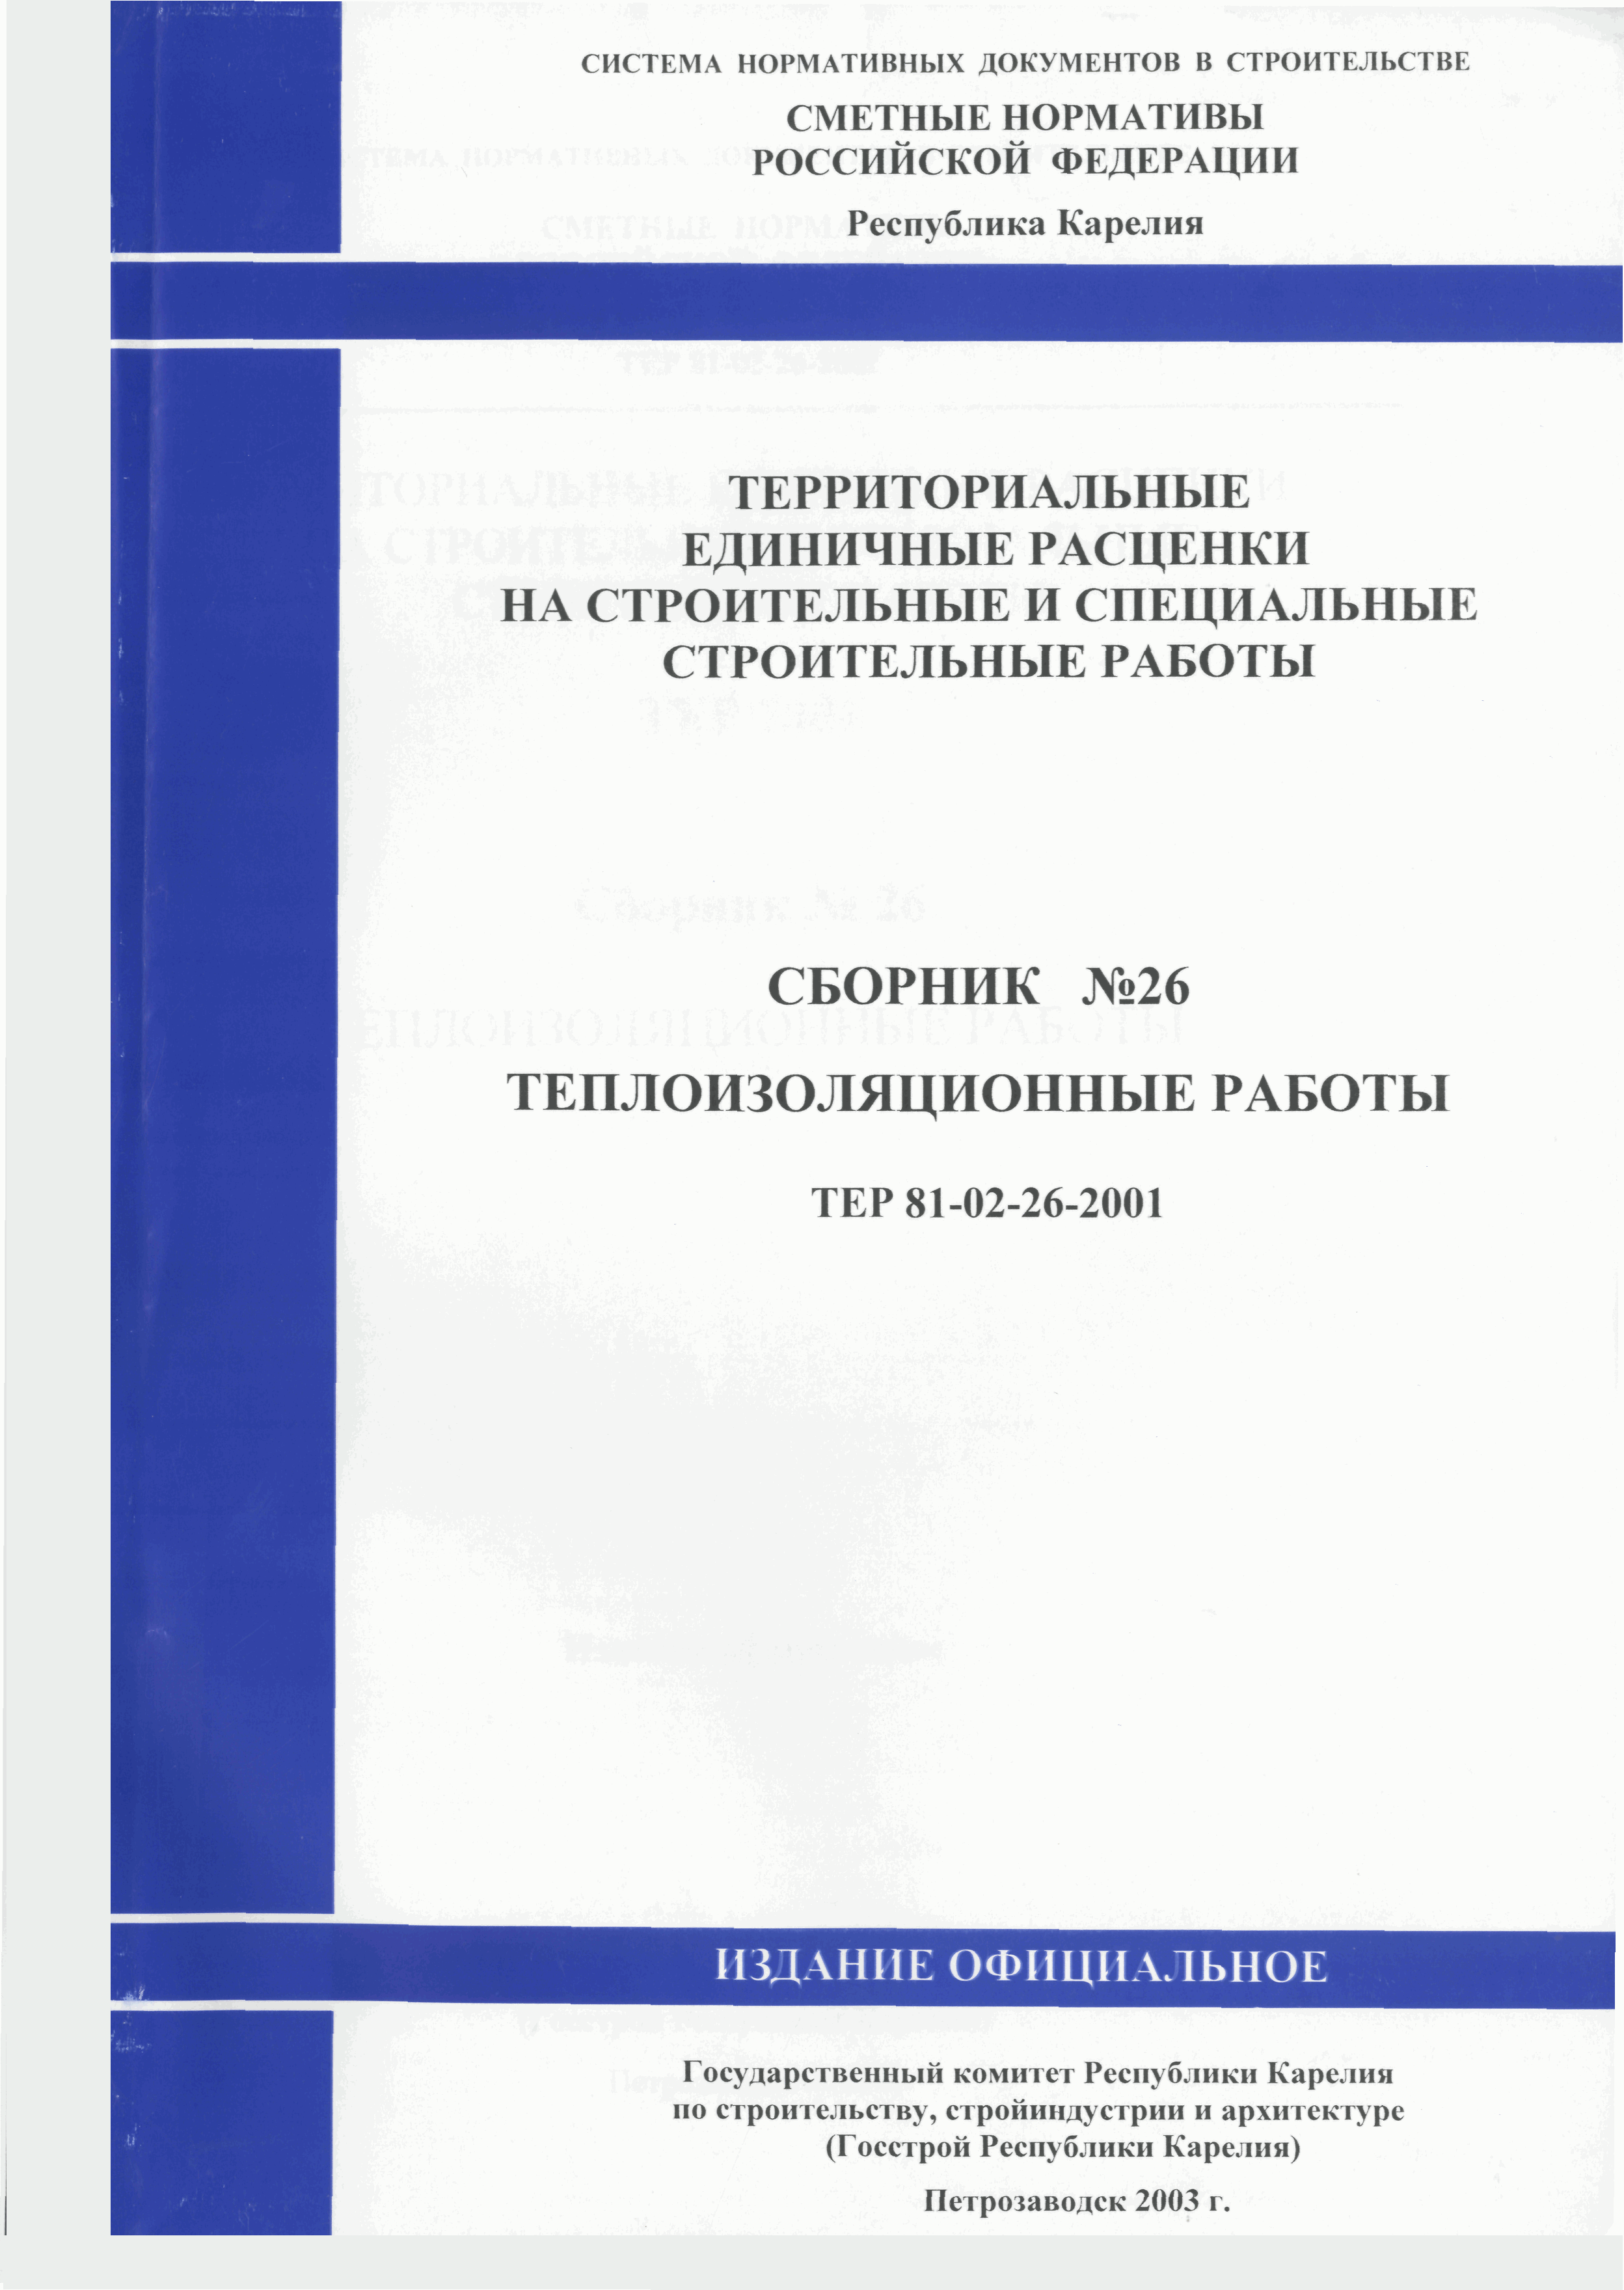 ТЕР Республика Карелия 2001-26